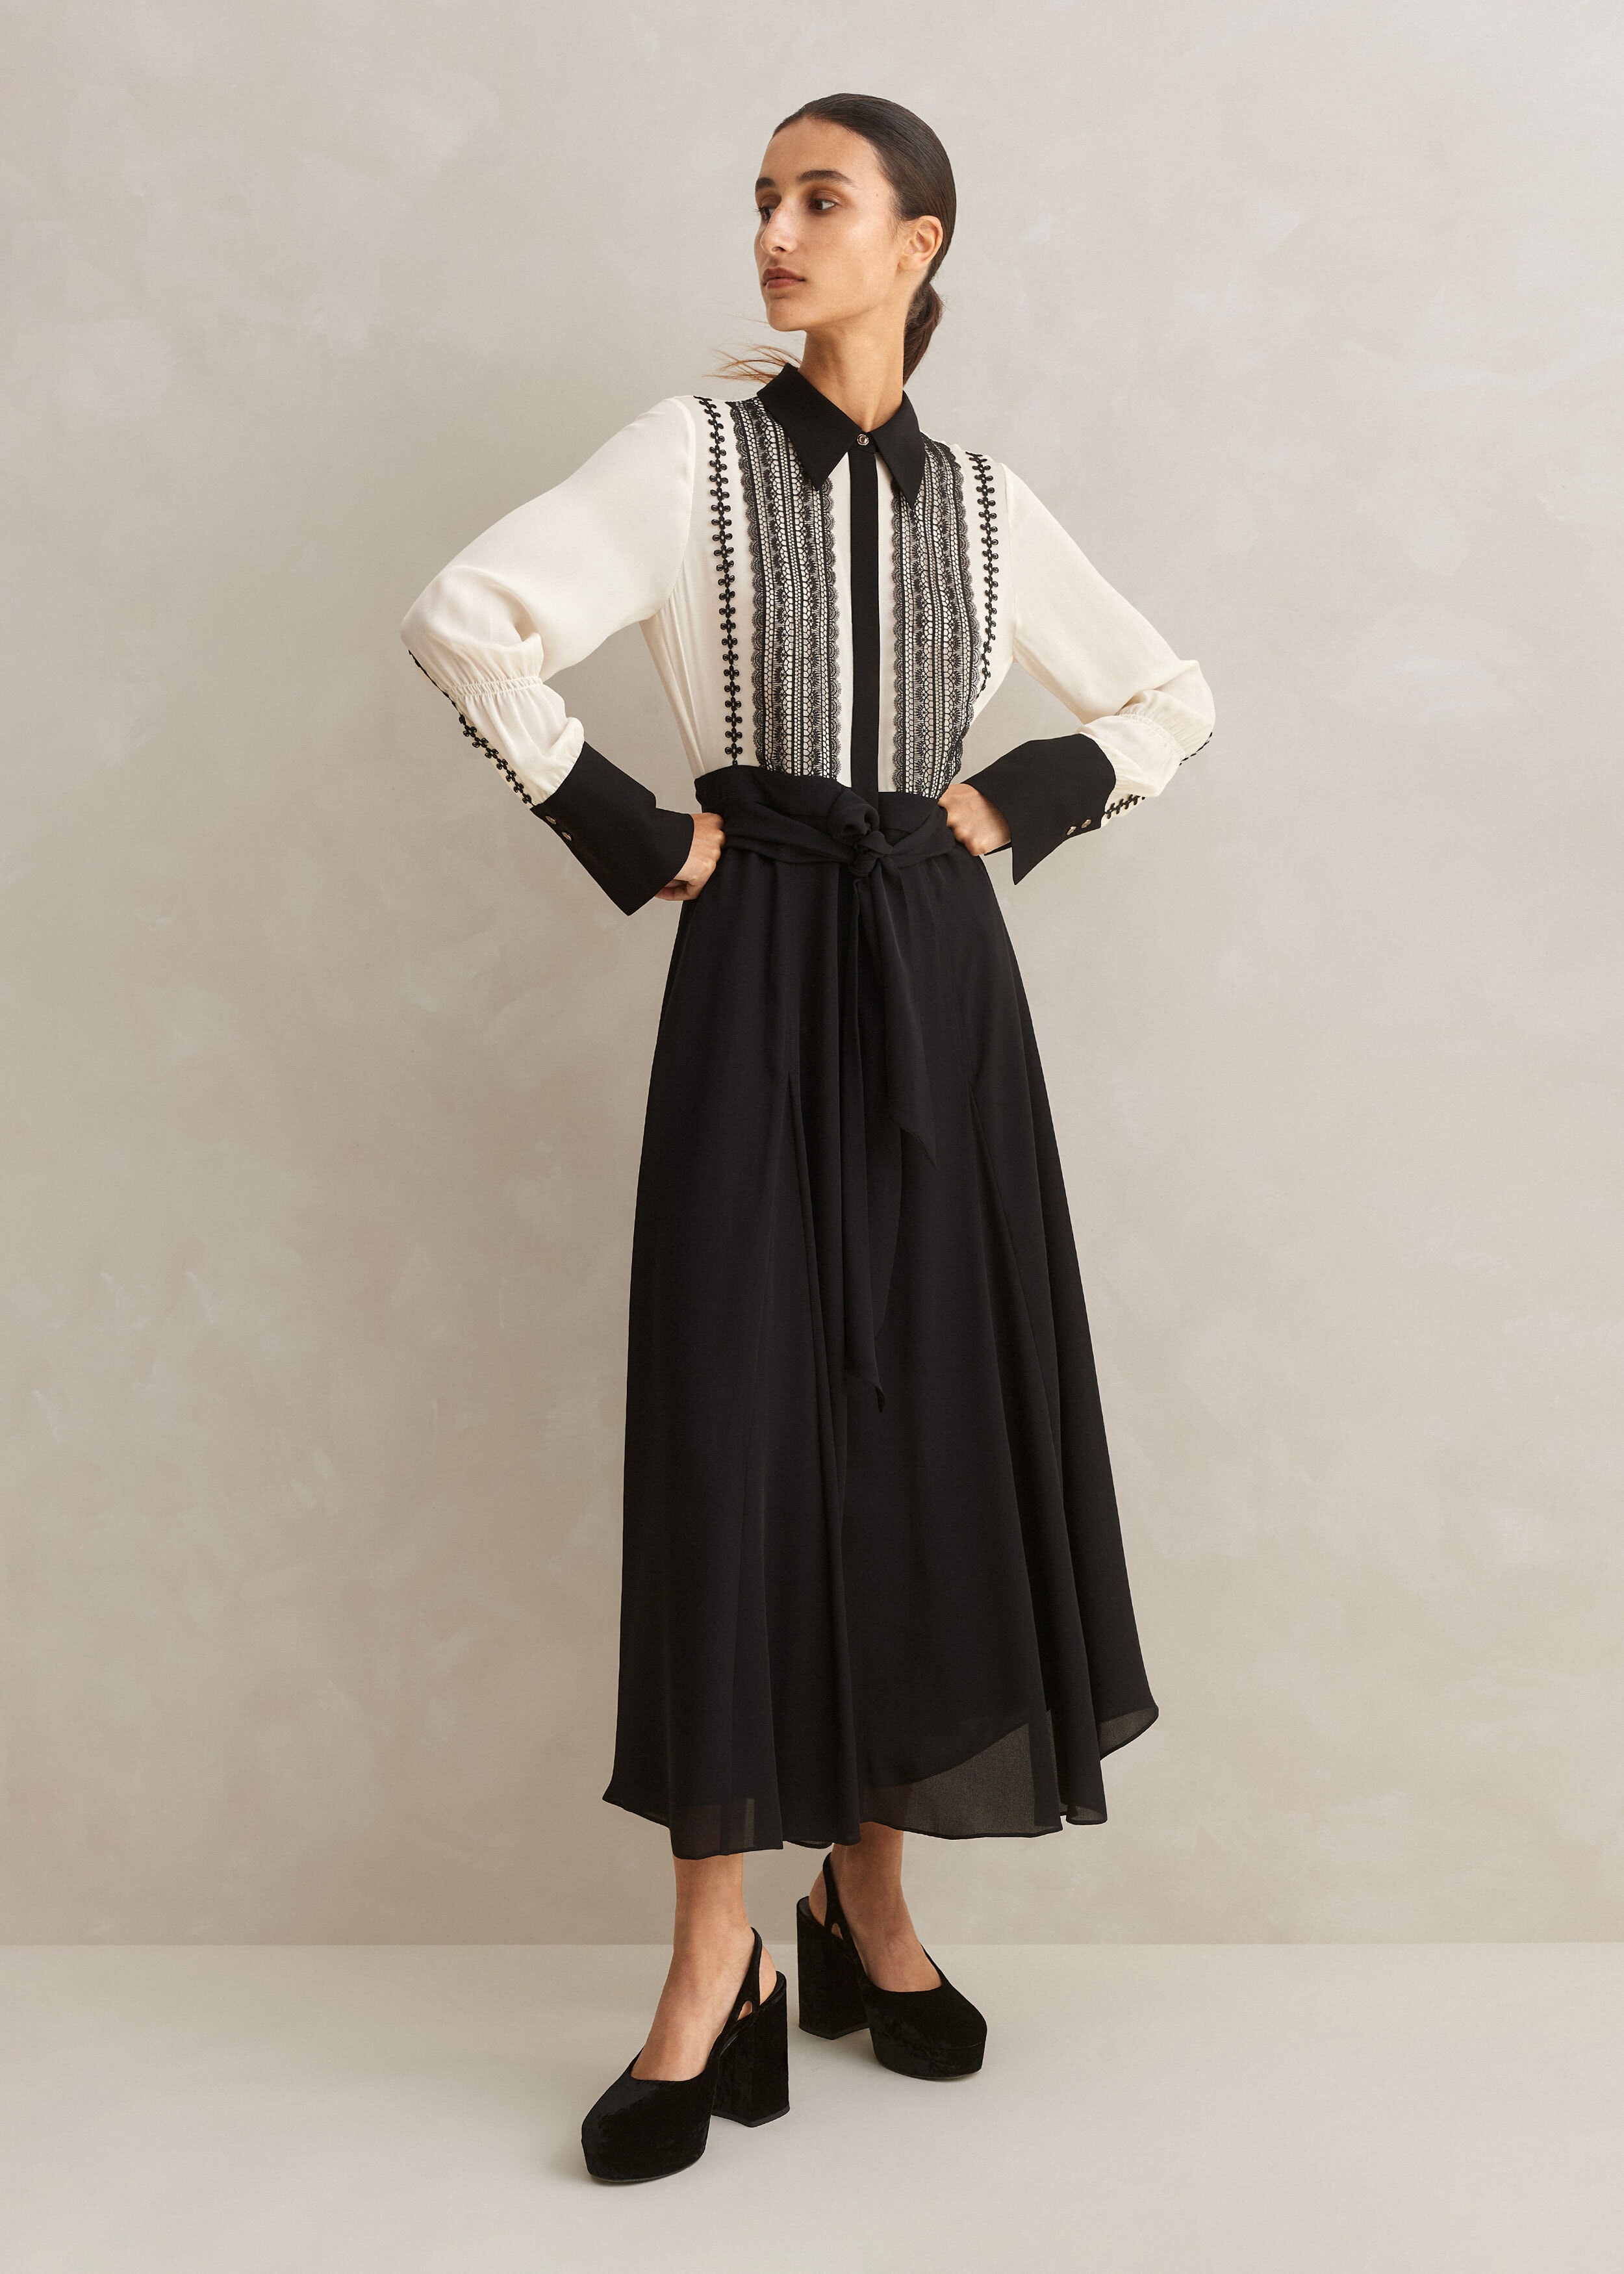 Silk Georgette Lace Shirt + Cream/Black Belt Dress Maxi